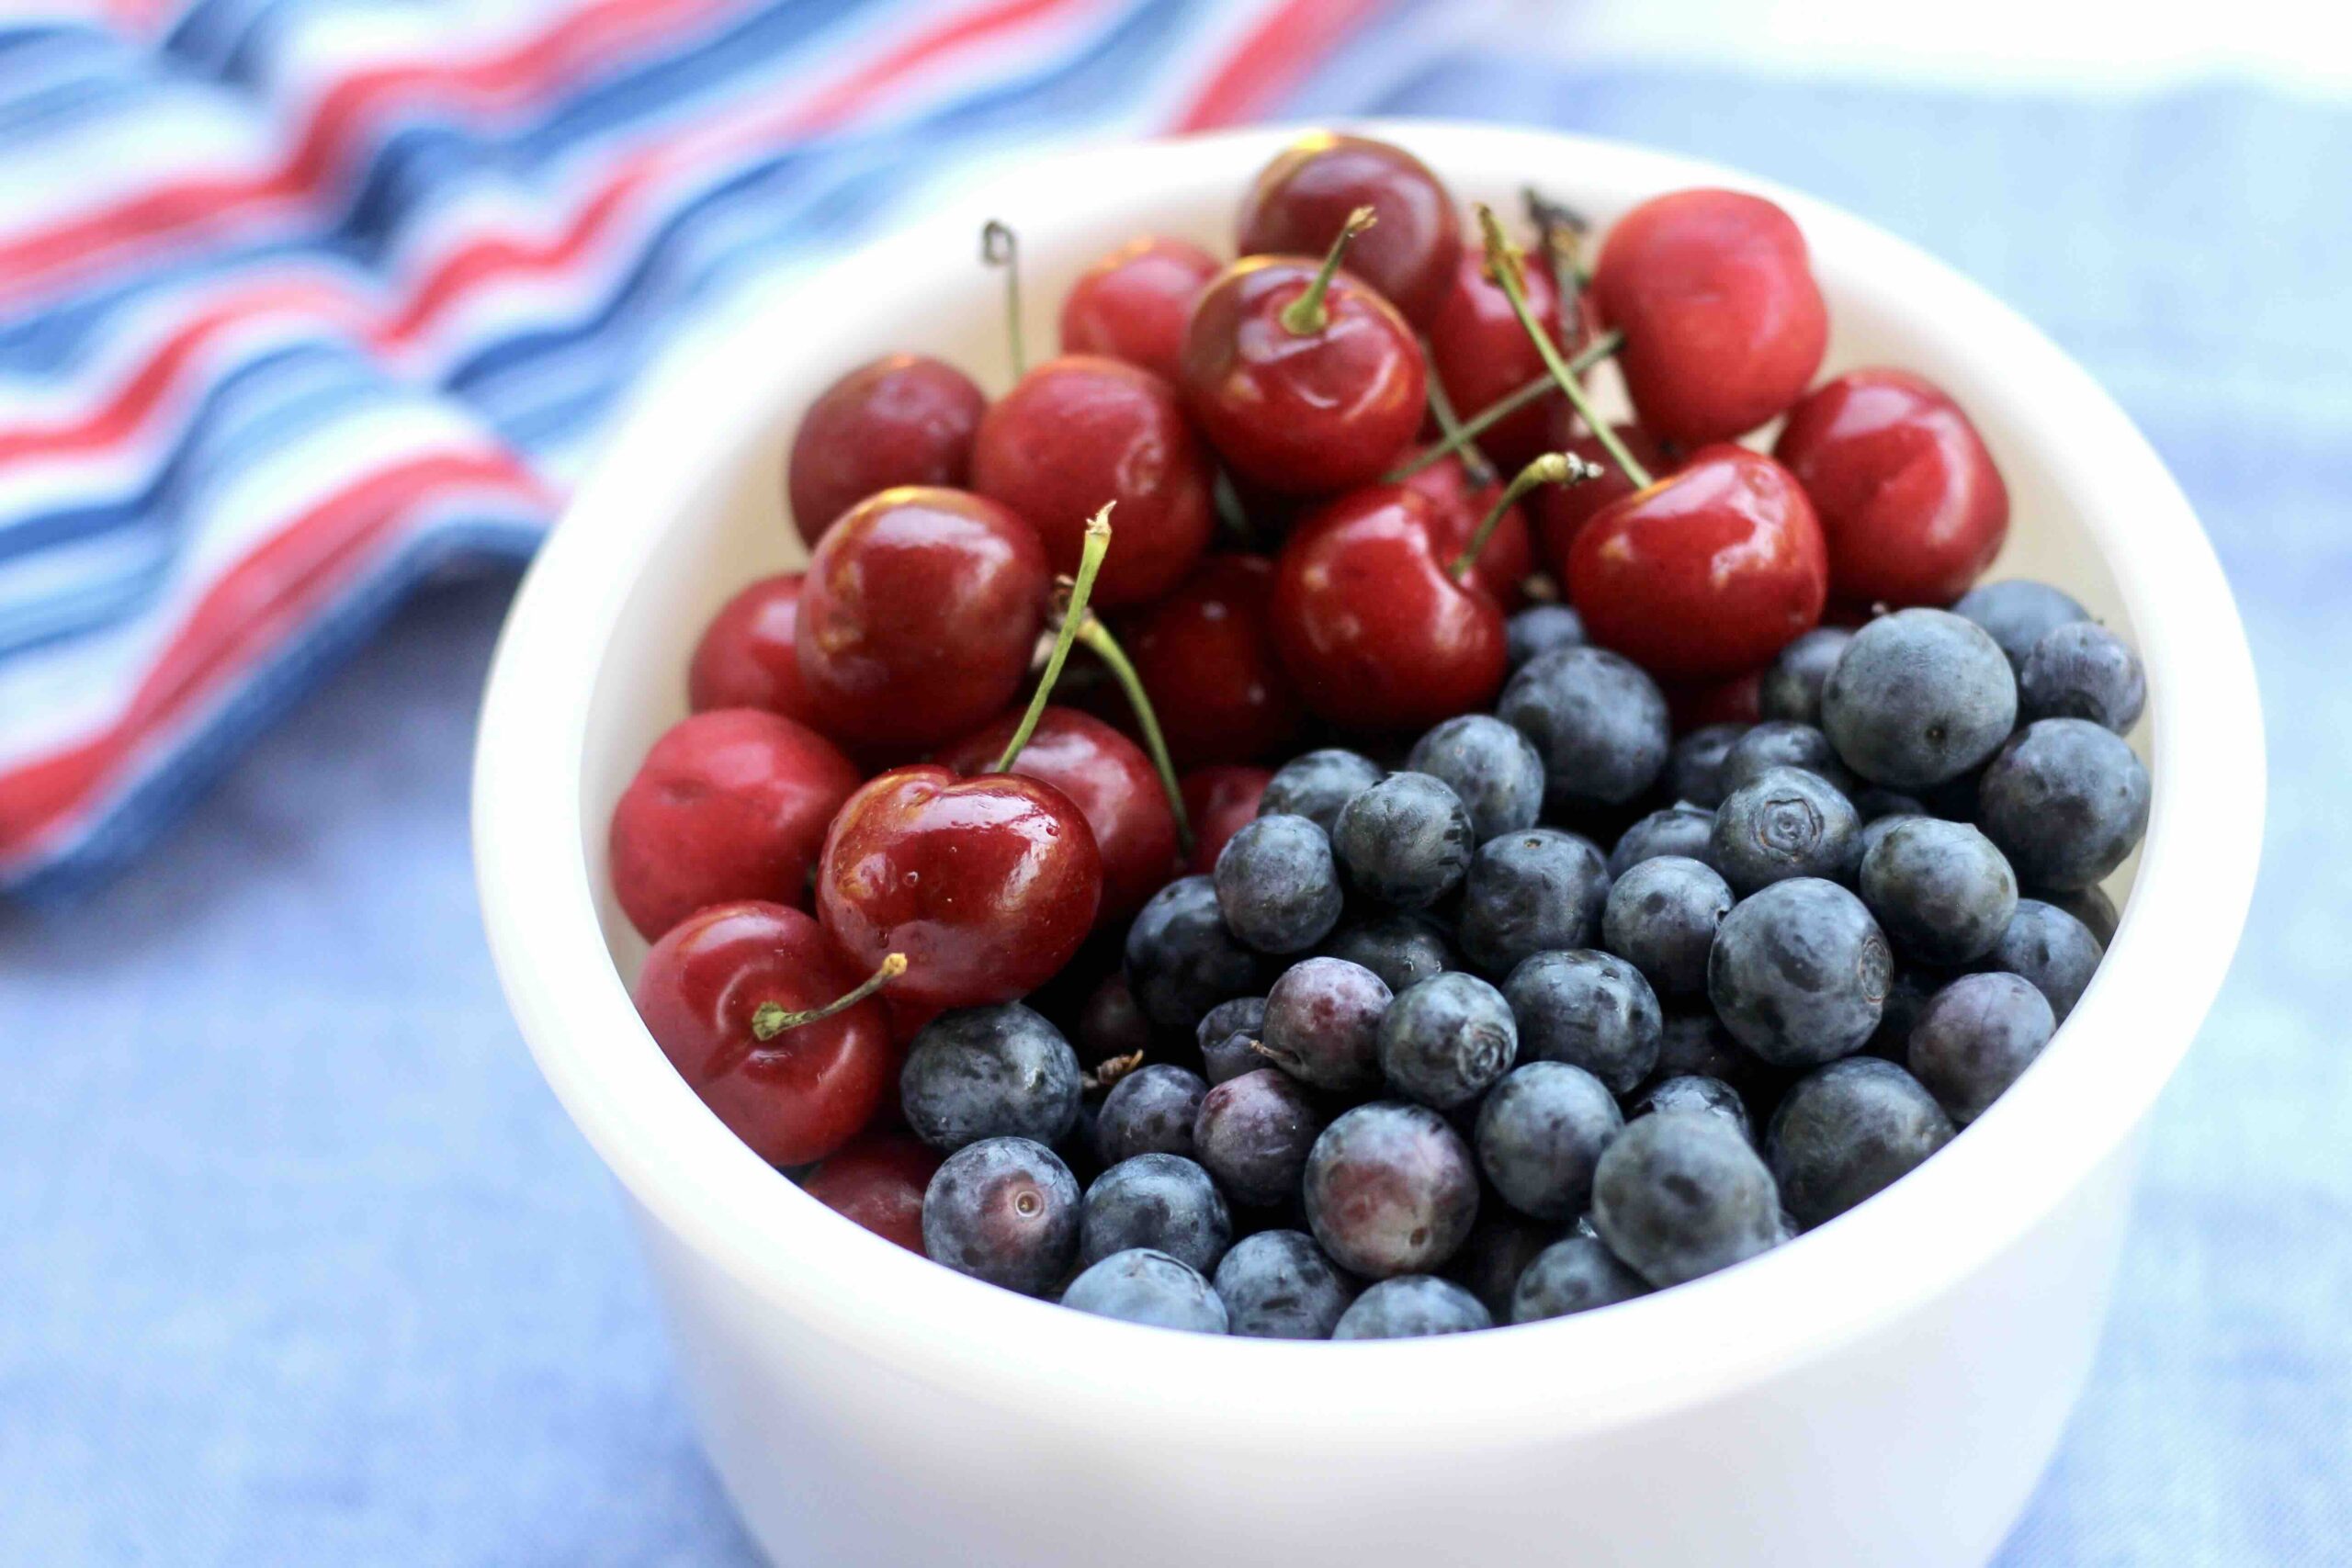 Cherries and Blueberries